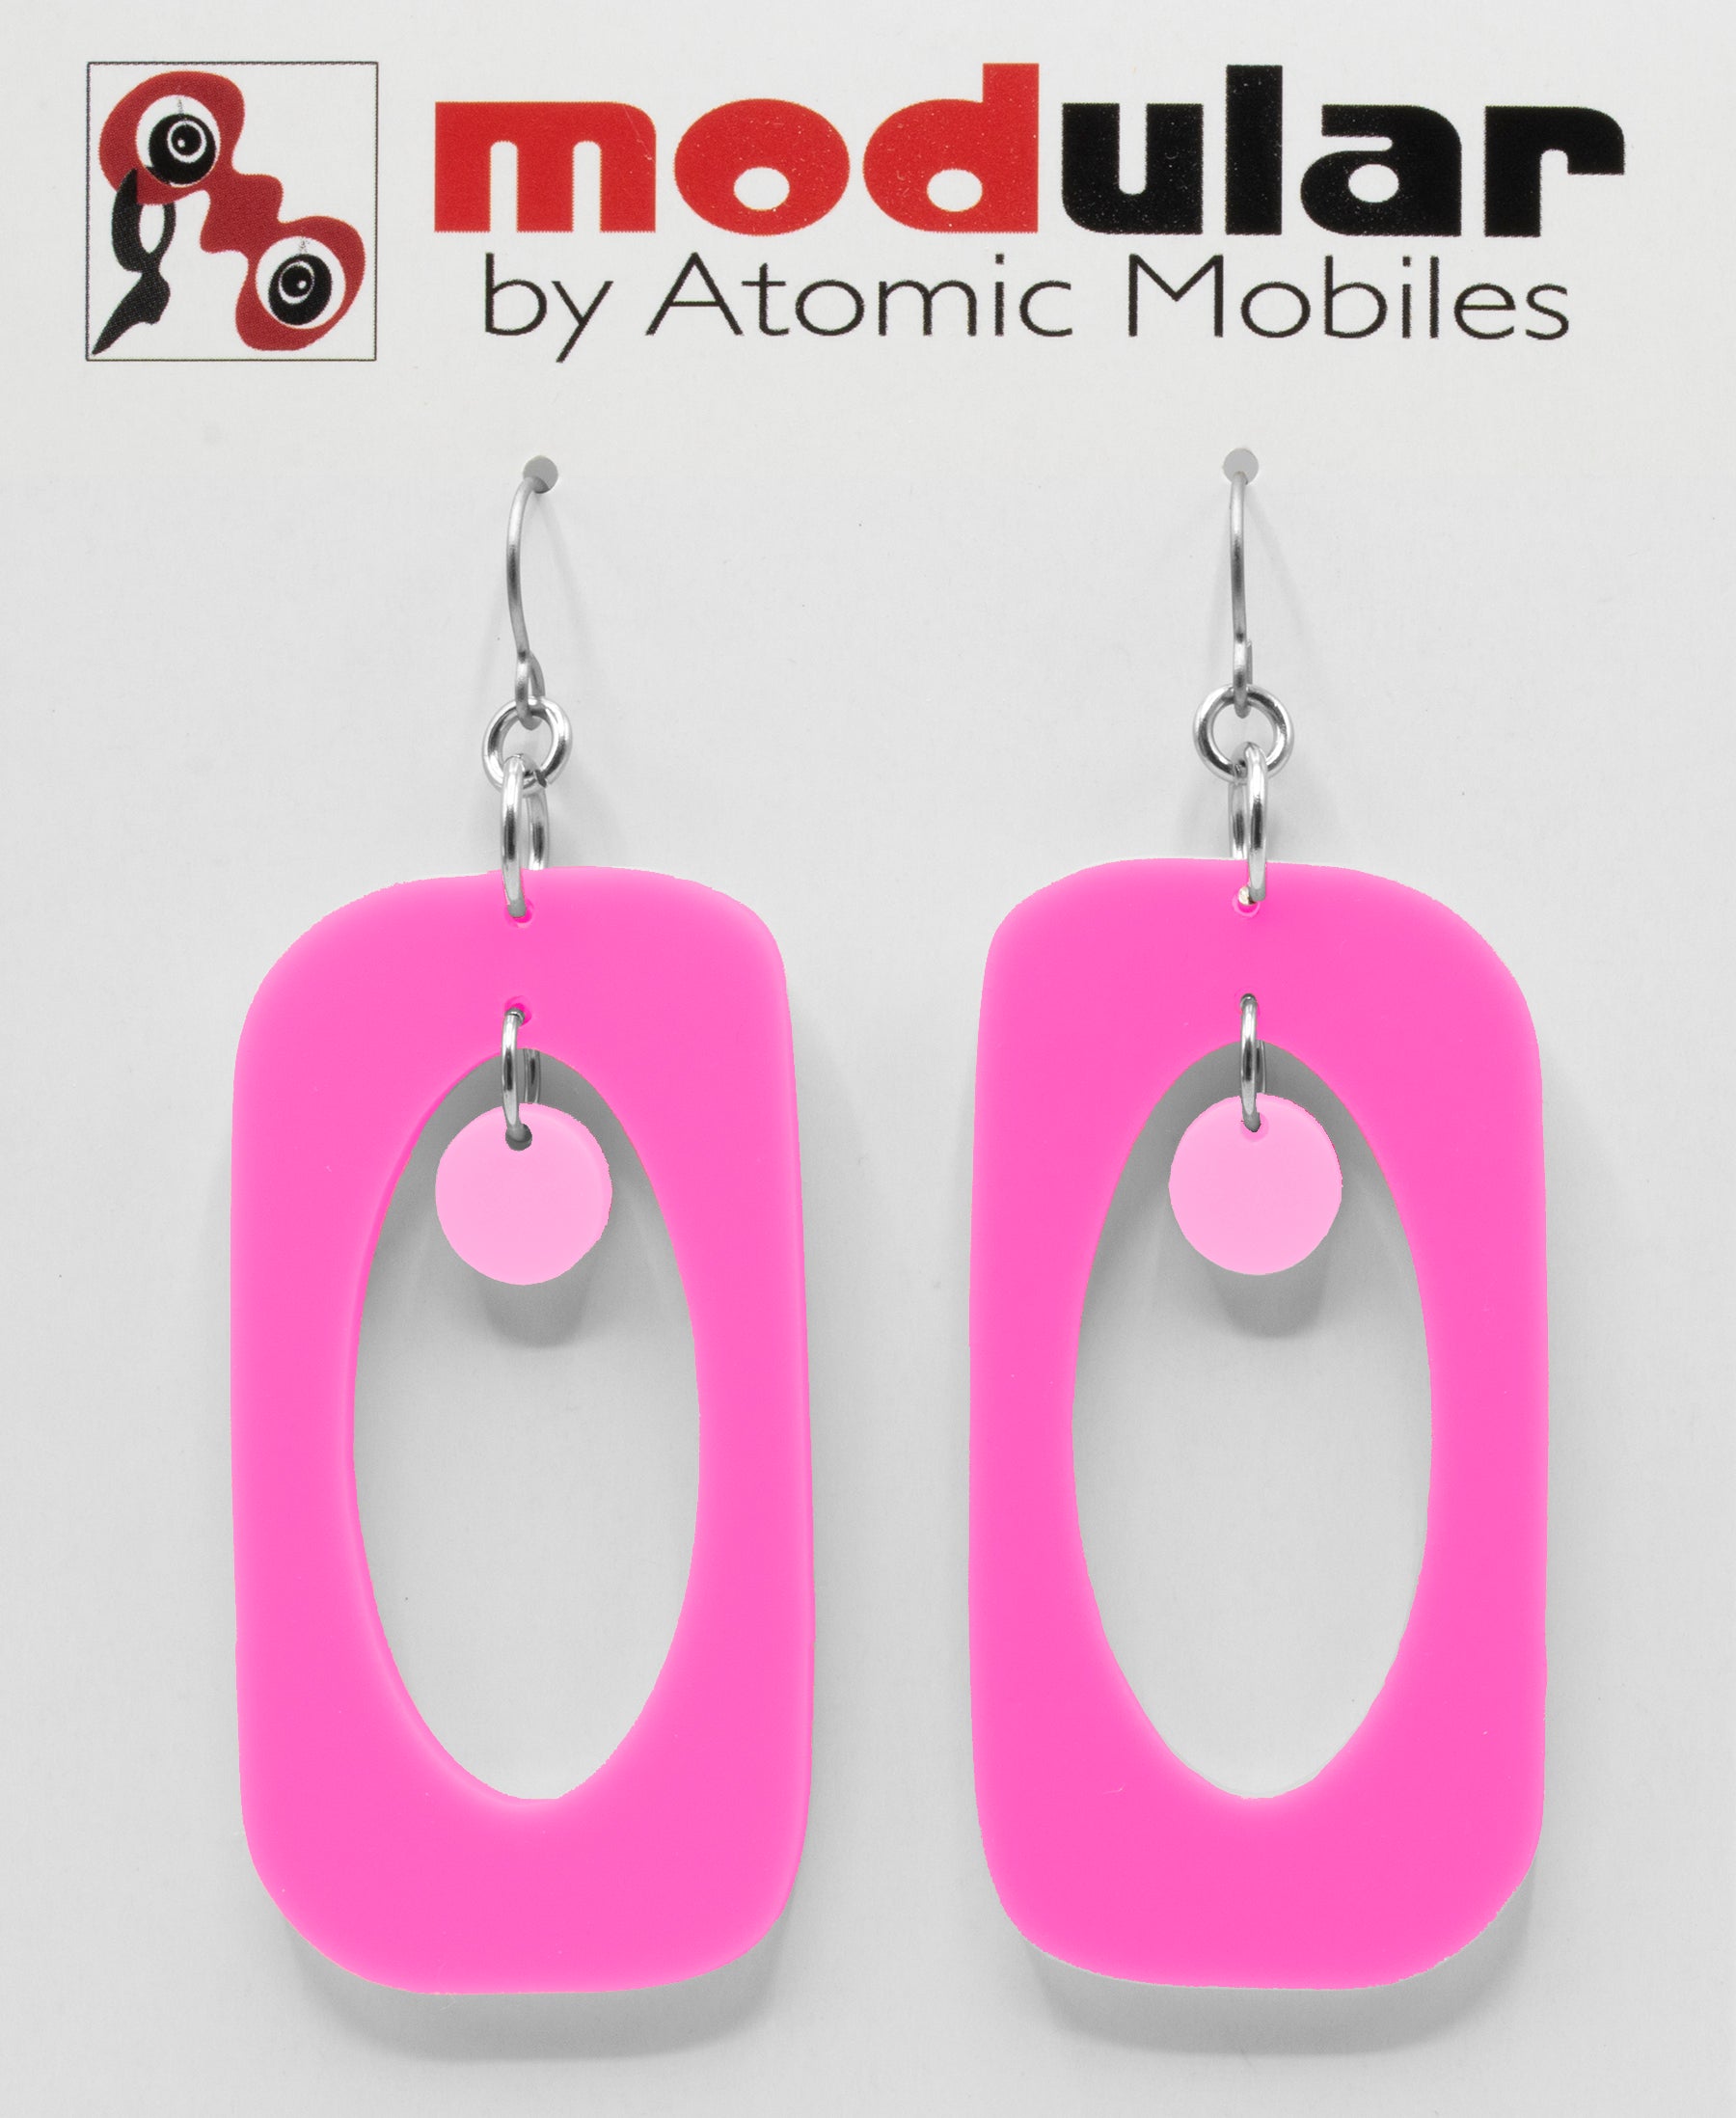 MODular Earrings - Beatnik Boho Statement Earrings in Hot Pink by AtomicMobiles.com - retro era inspired mod handmade jewelry